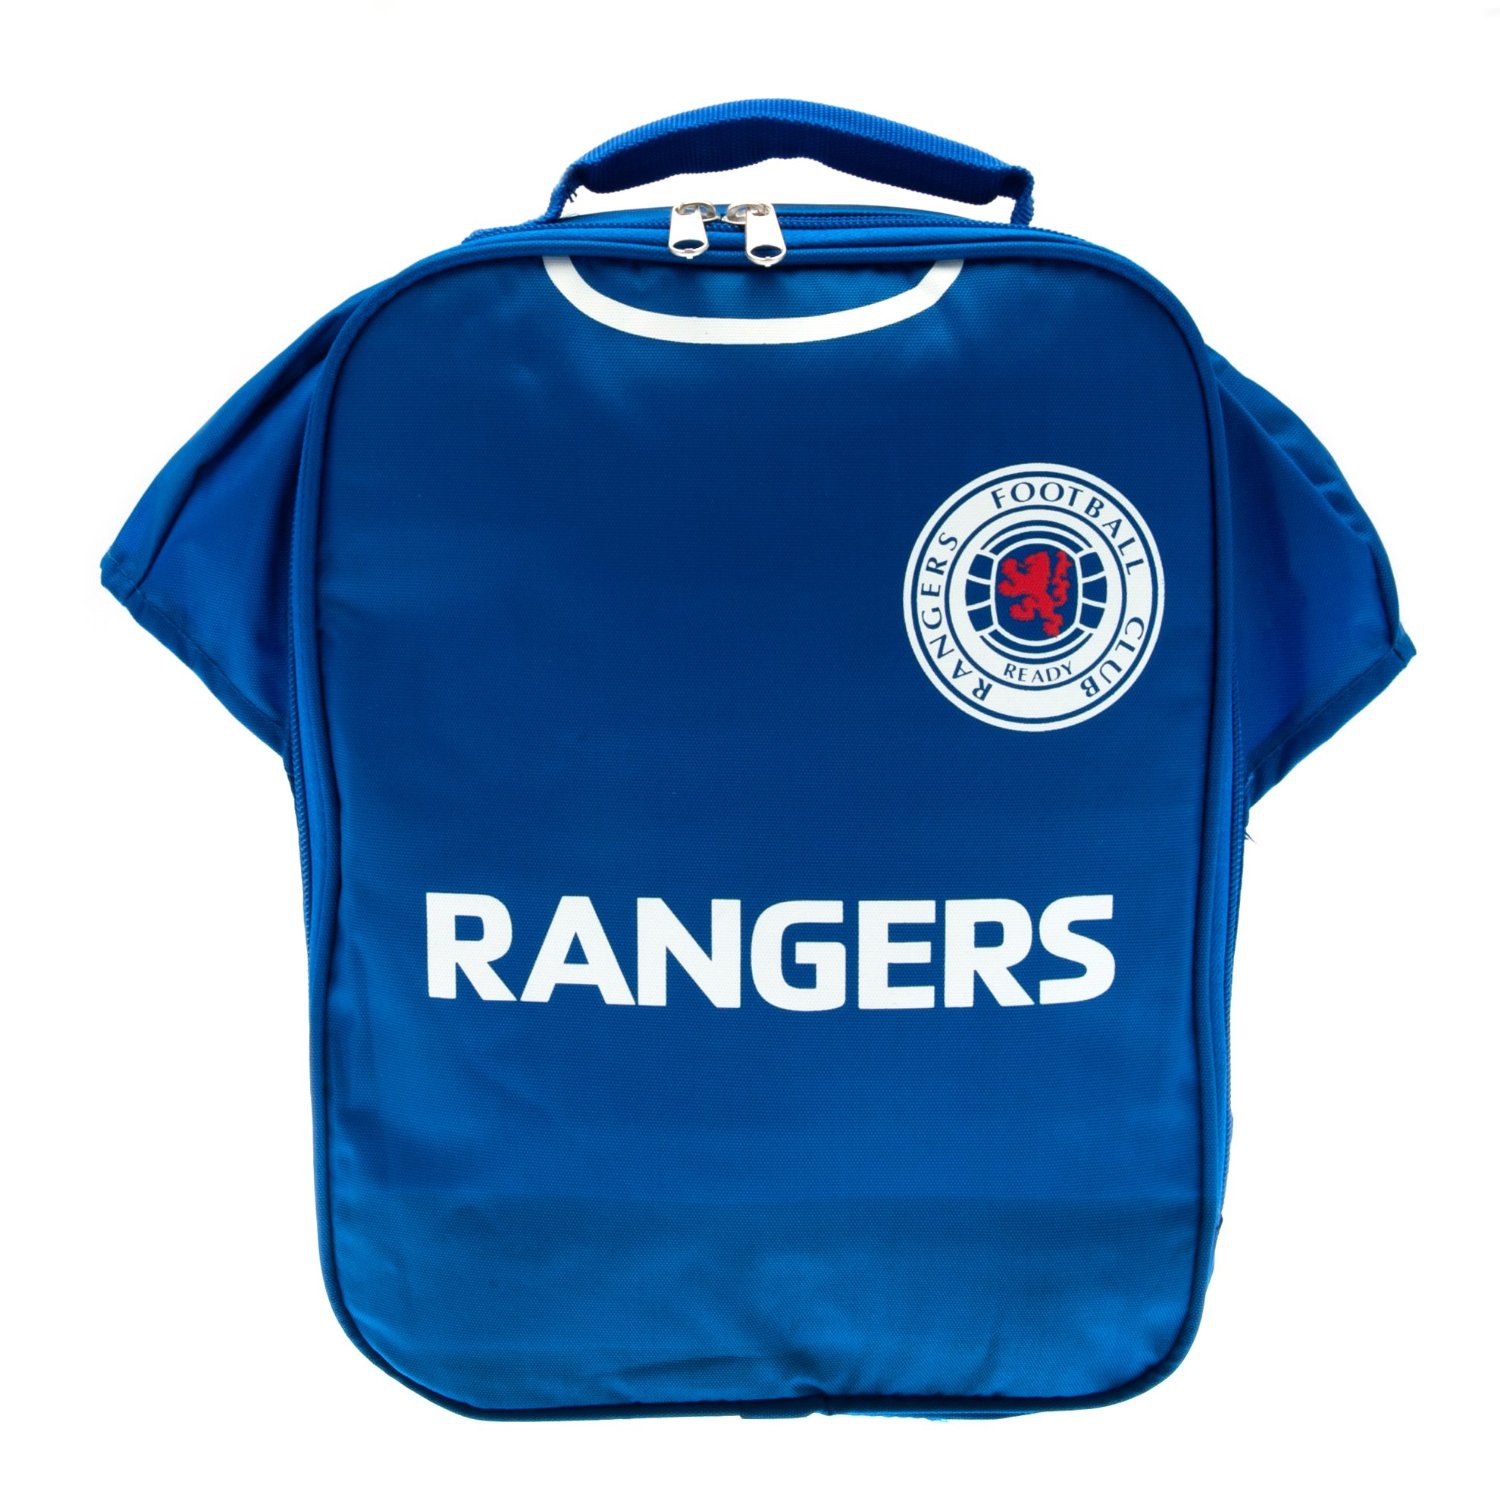 Rangers Fc 'Jersey' Lunch Bag Kit Football Premium Official